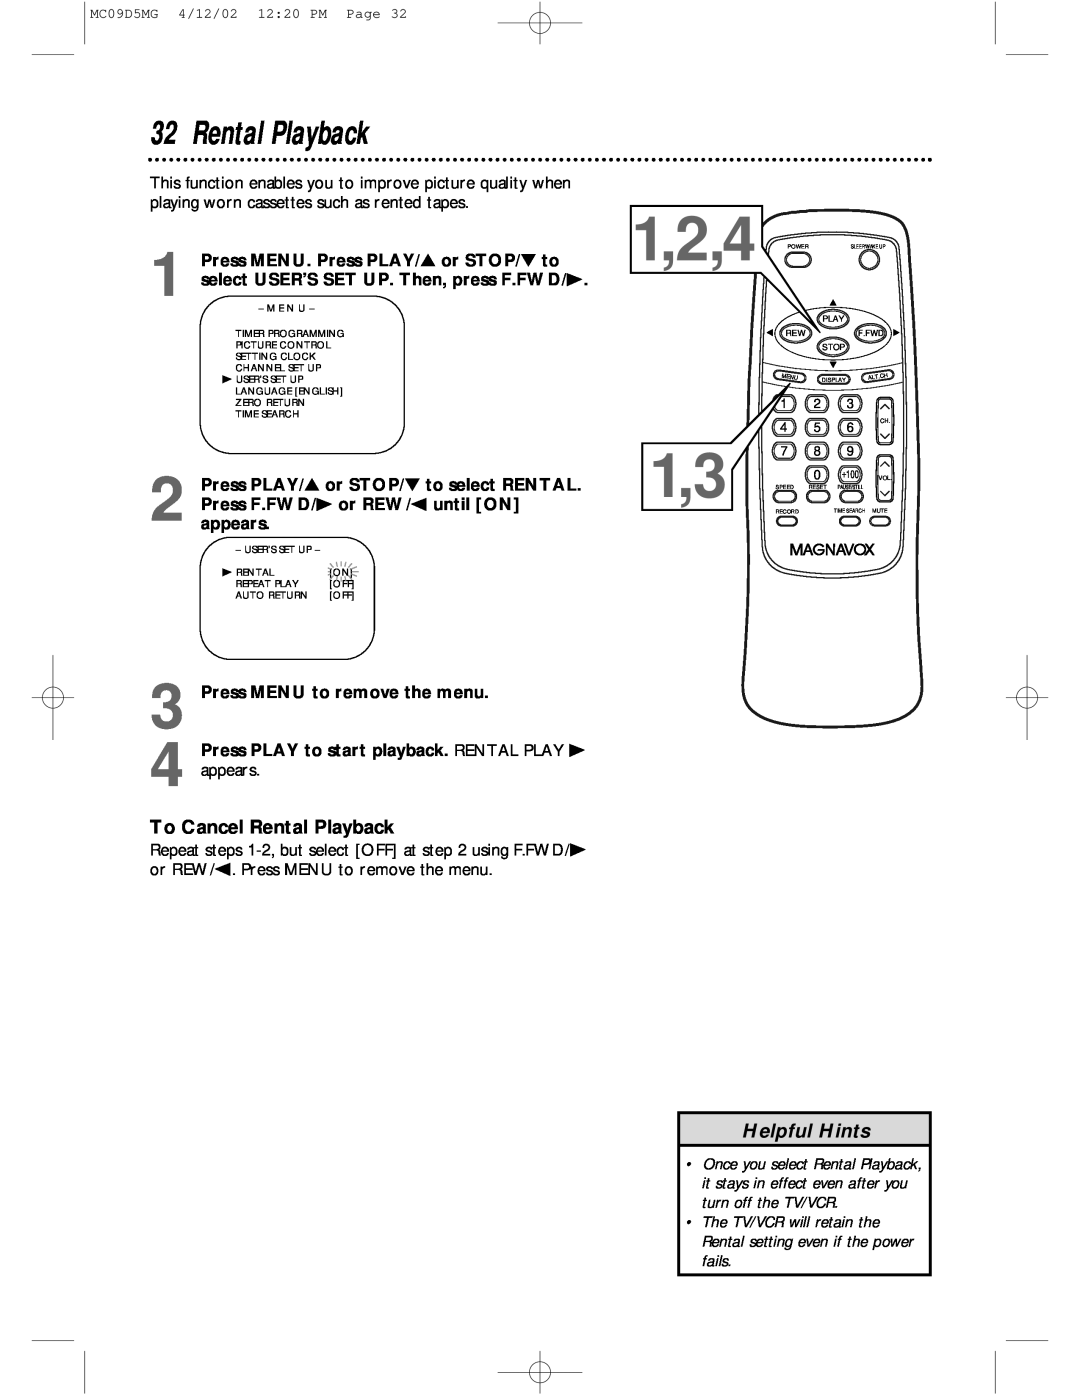 Magnavox MC09D5MG owner manual 1,2,4, Helpful Hints, To Cancel Rental Playback, Press MENU to remove the menu 